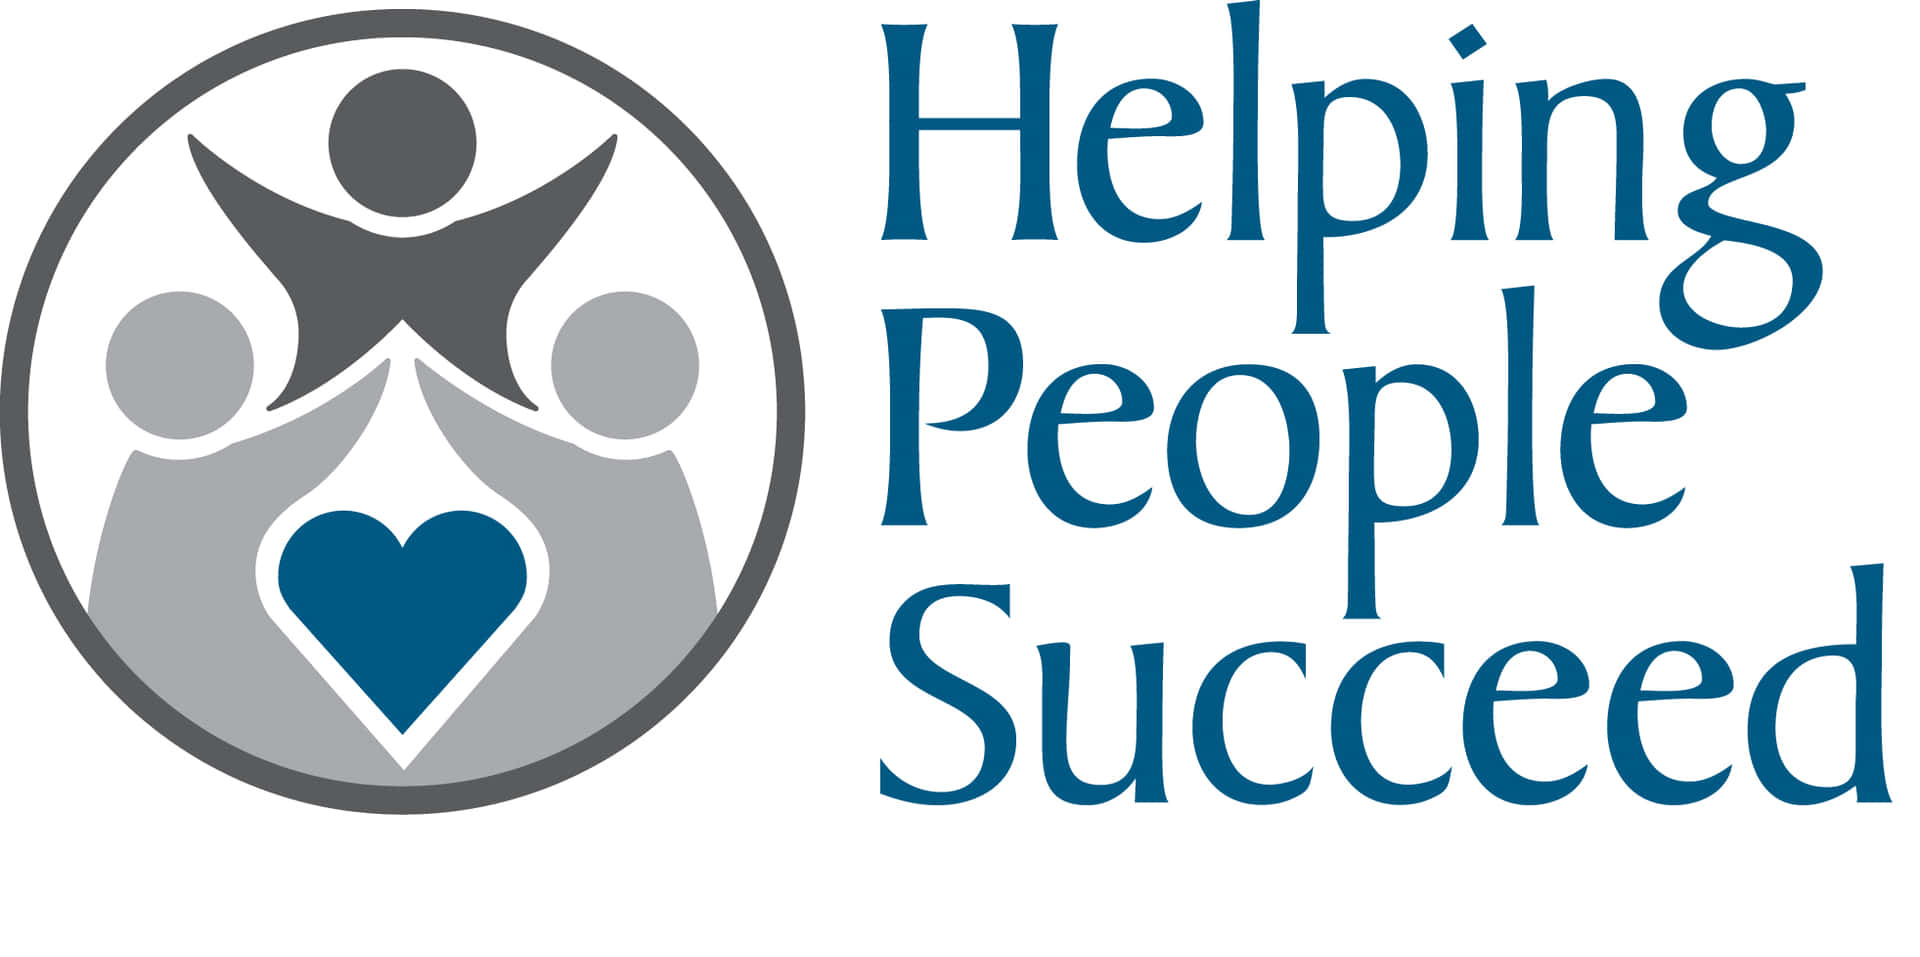 Helping People Succeed Logo